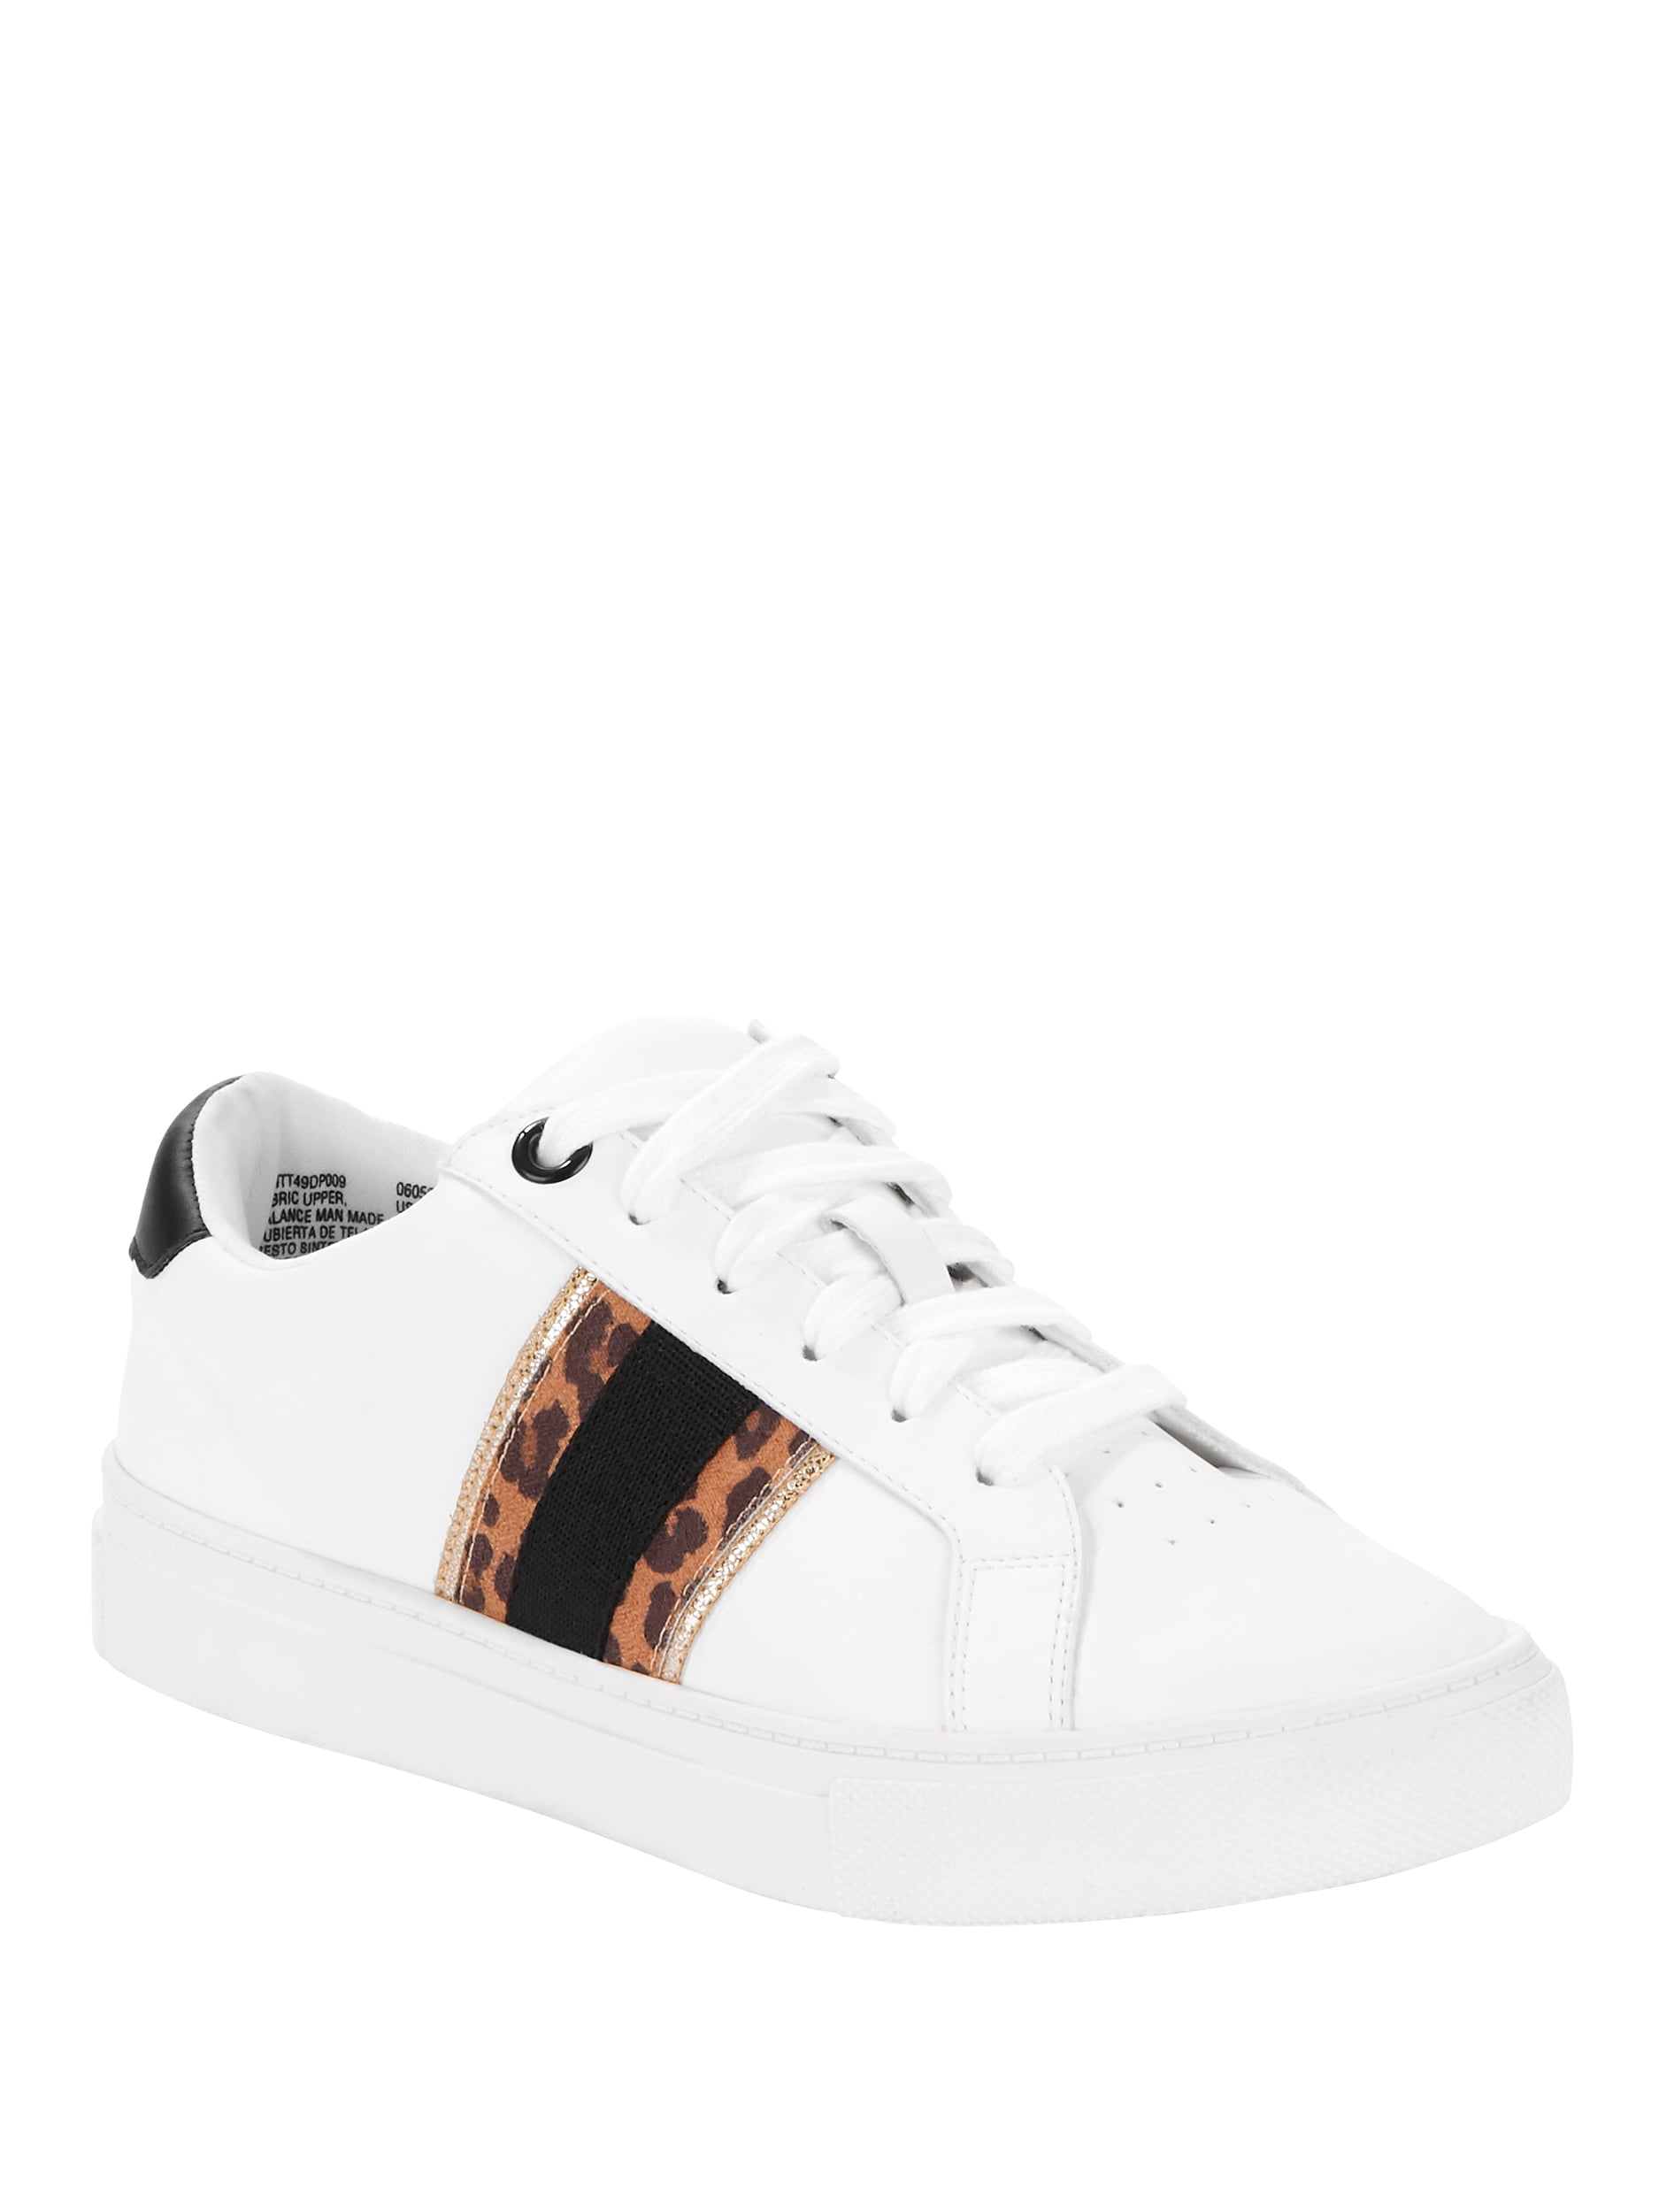 leopard shoes sneakers